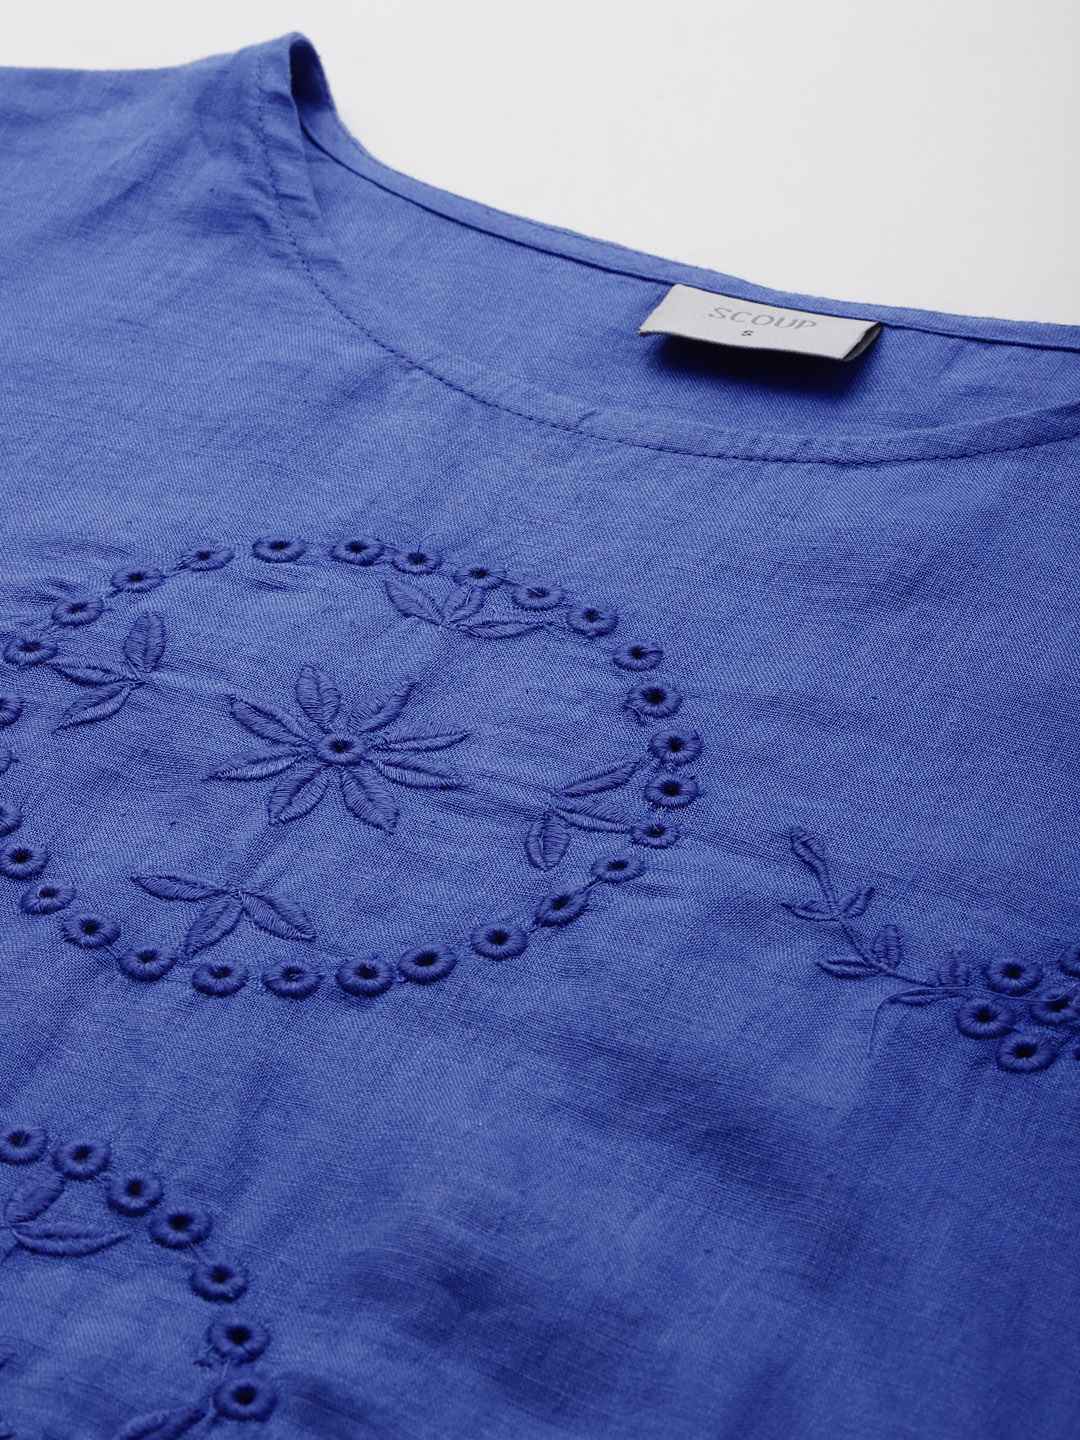 Blue Schiffli Embroidered Cotton Linen?op